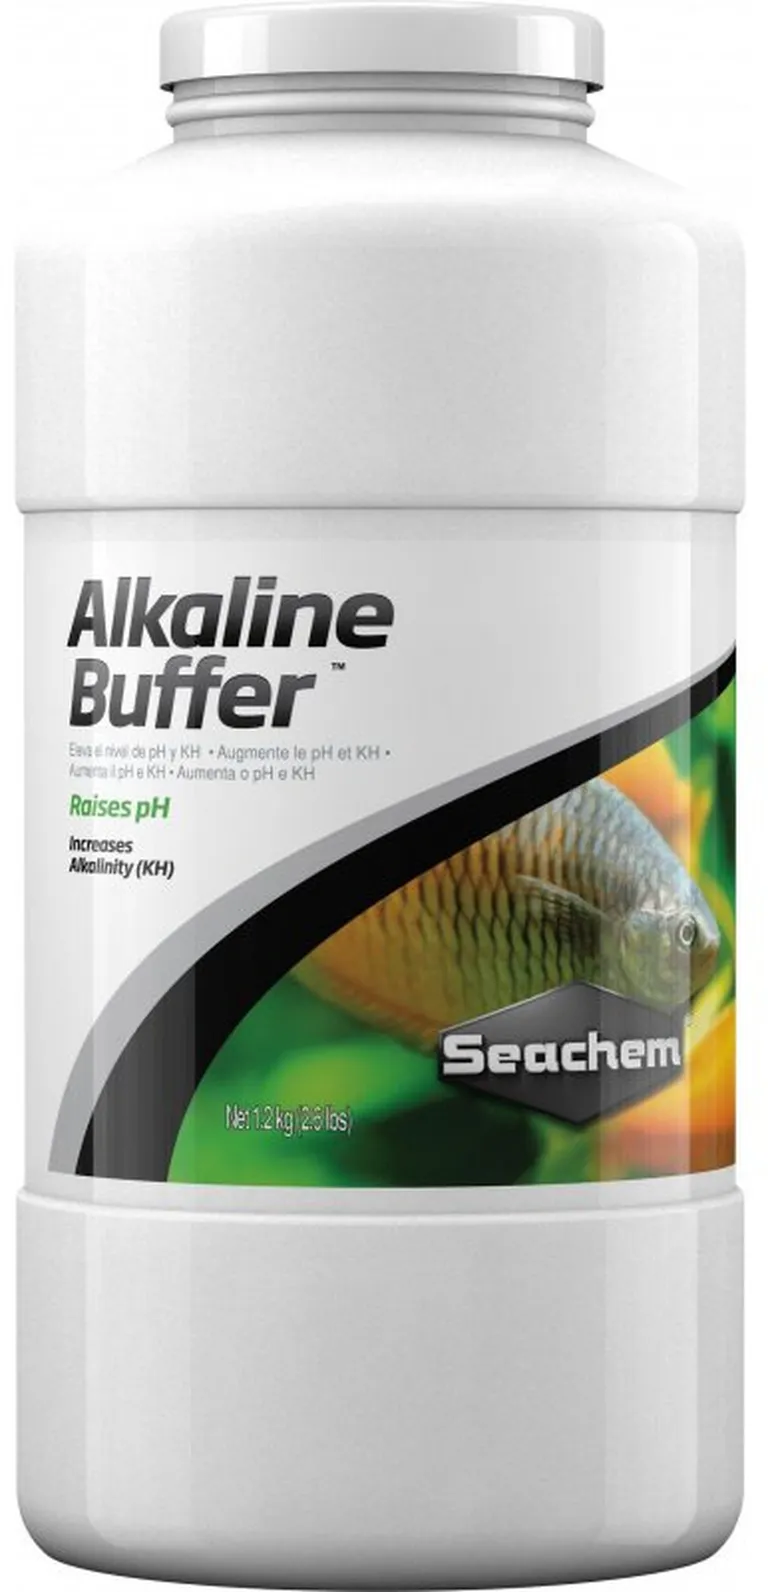 Seachem Alkaline Buffer Raises pH and Increases Alkalinity KH for Aquariums Photo 1